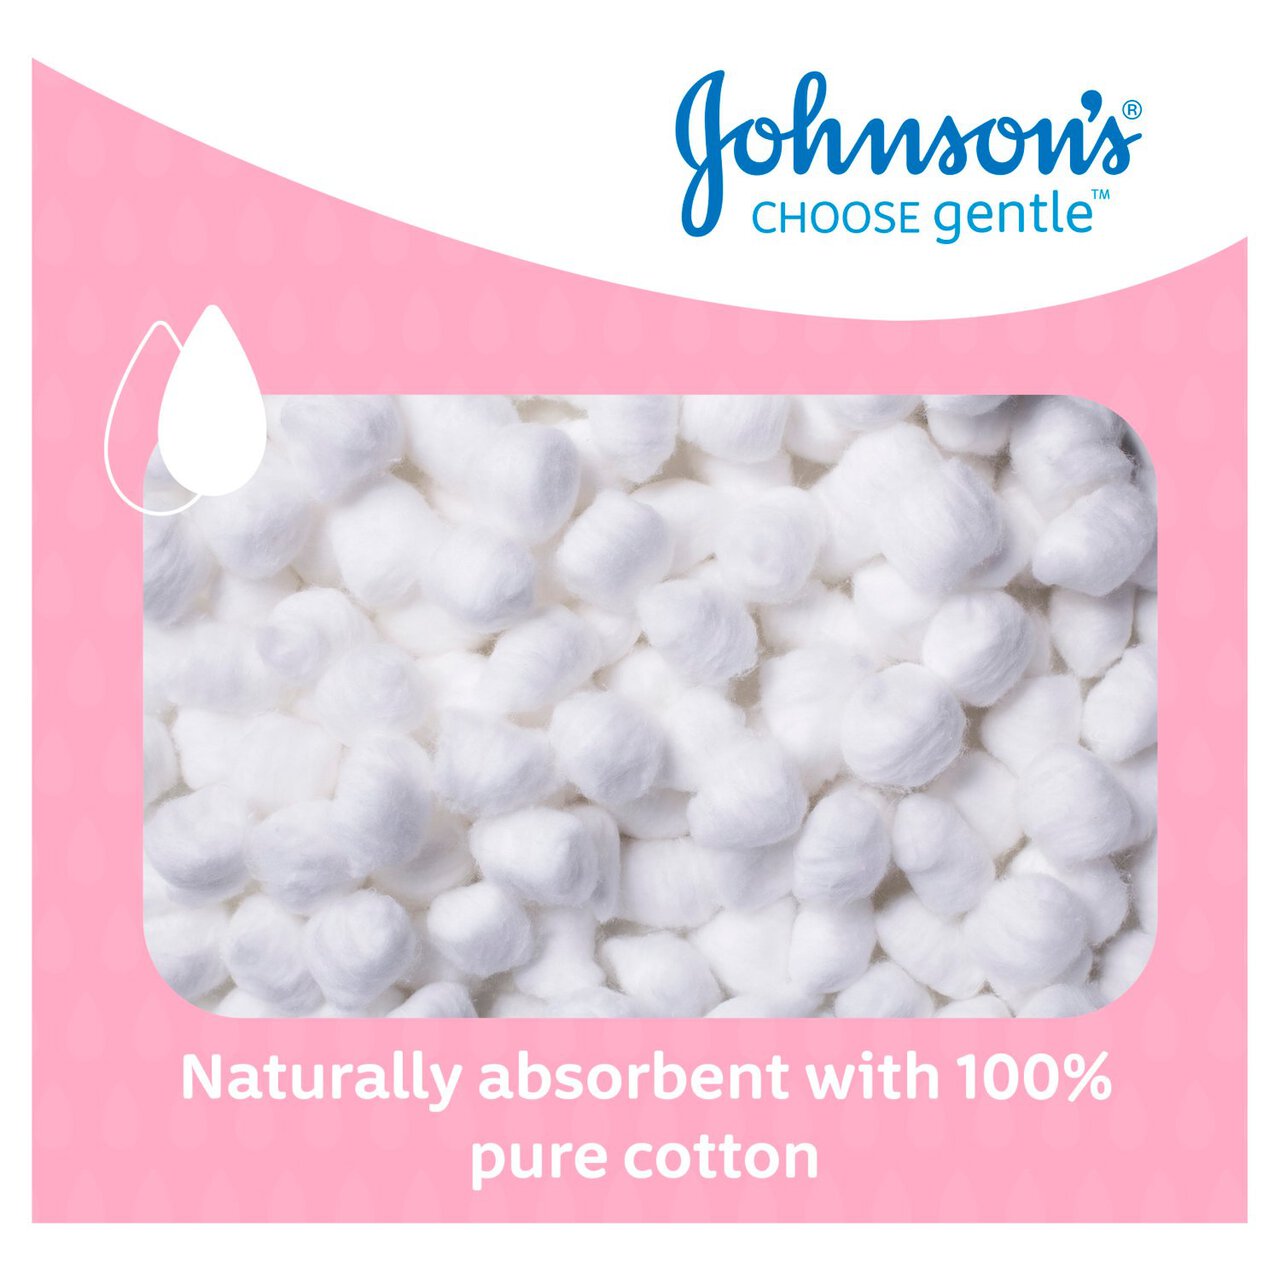 Johnson's Baby Cotton Balls 75 per pack